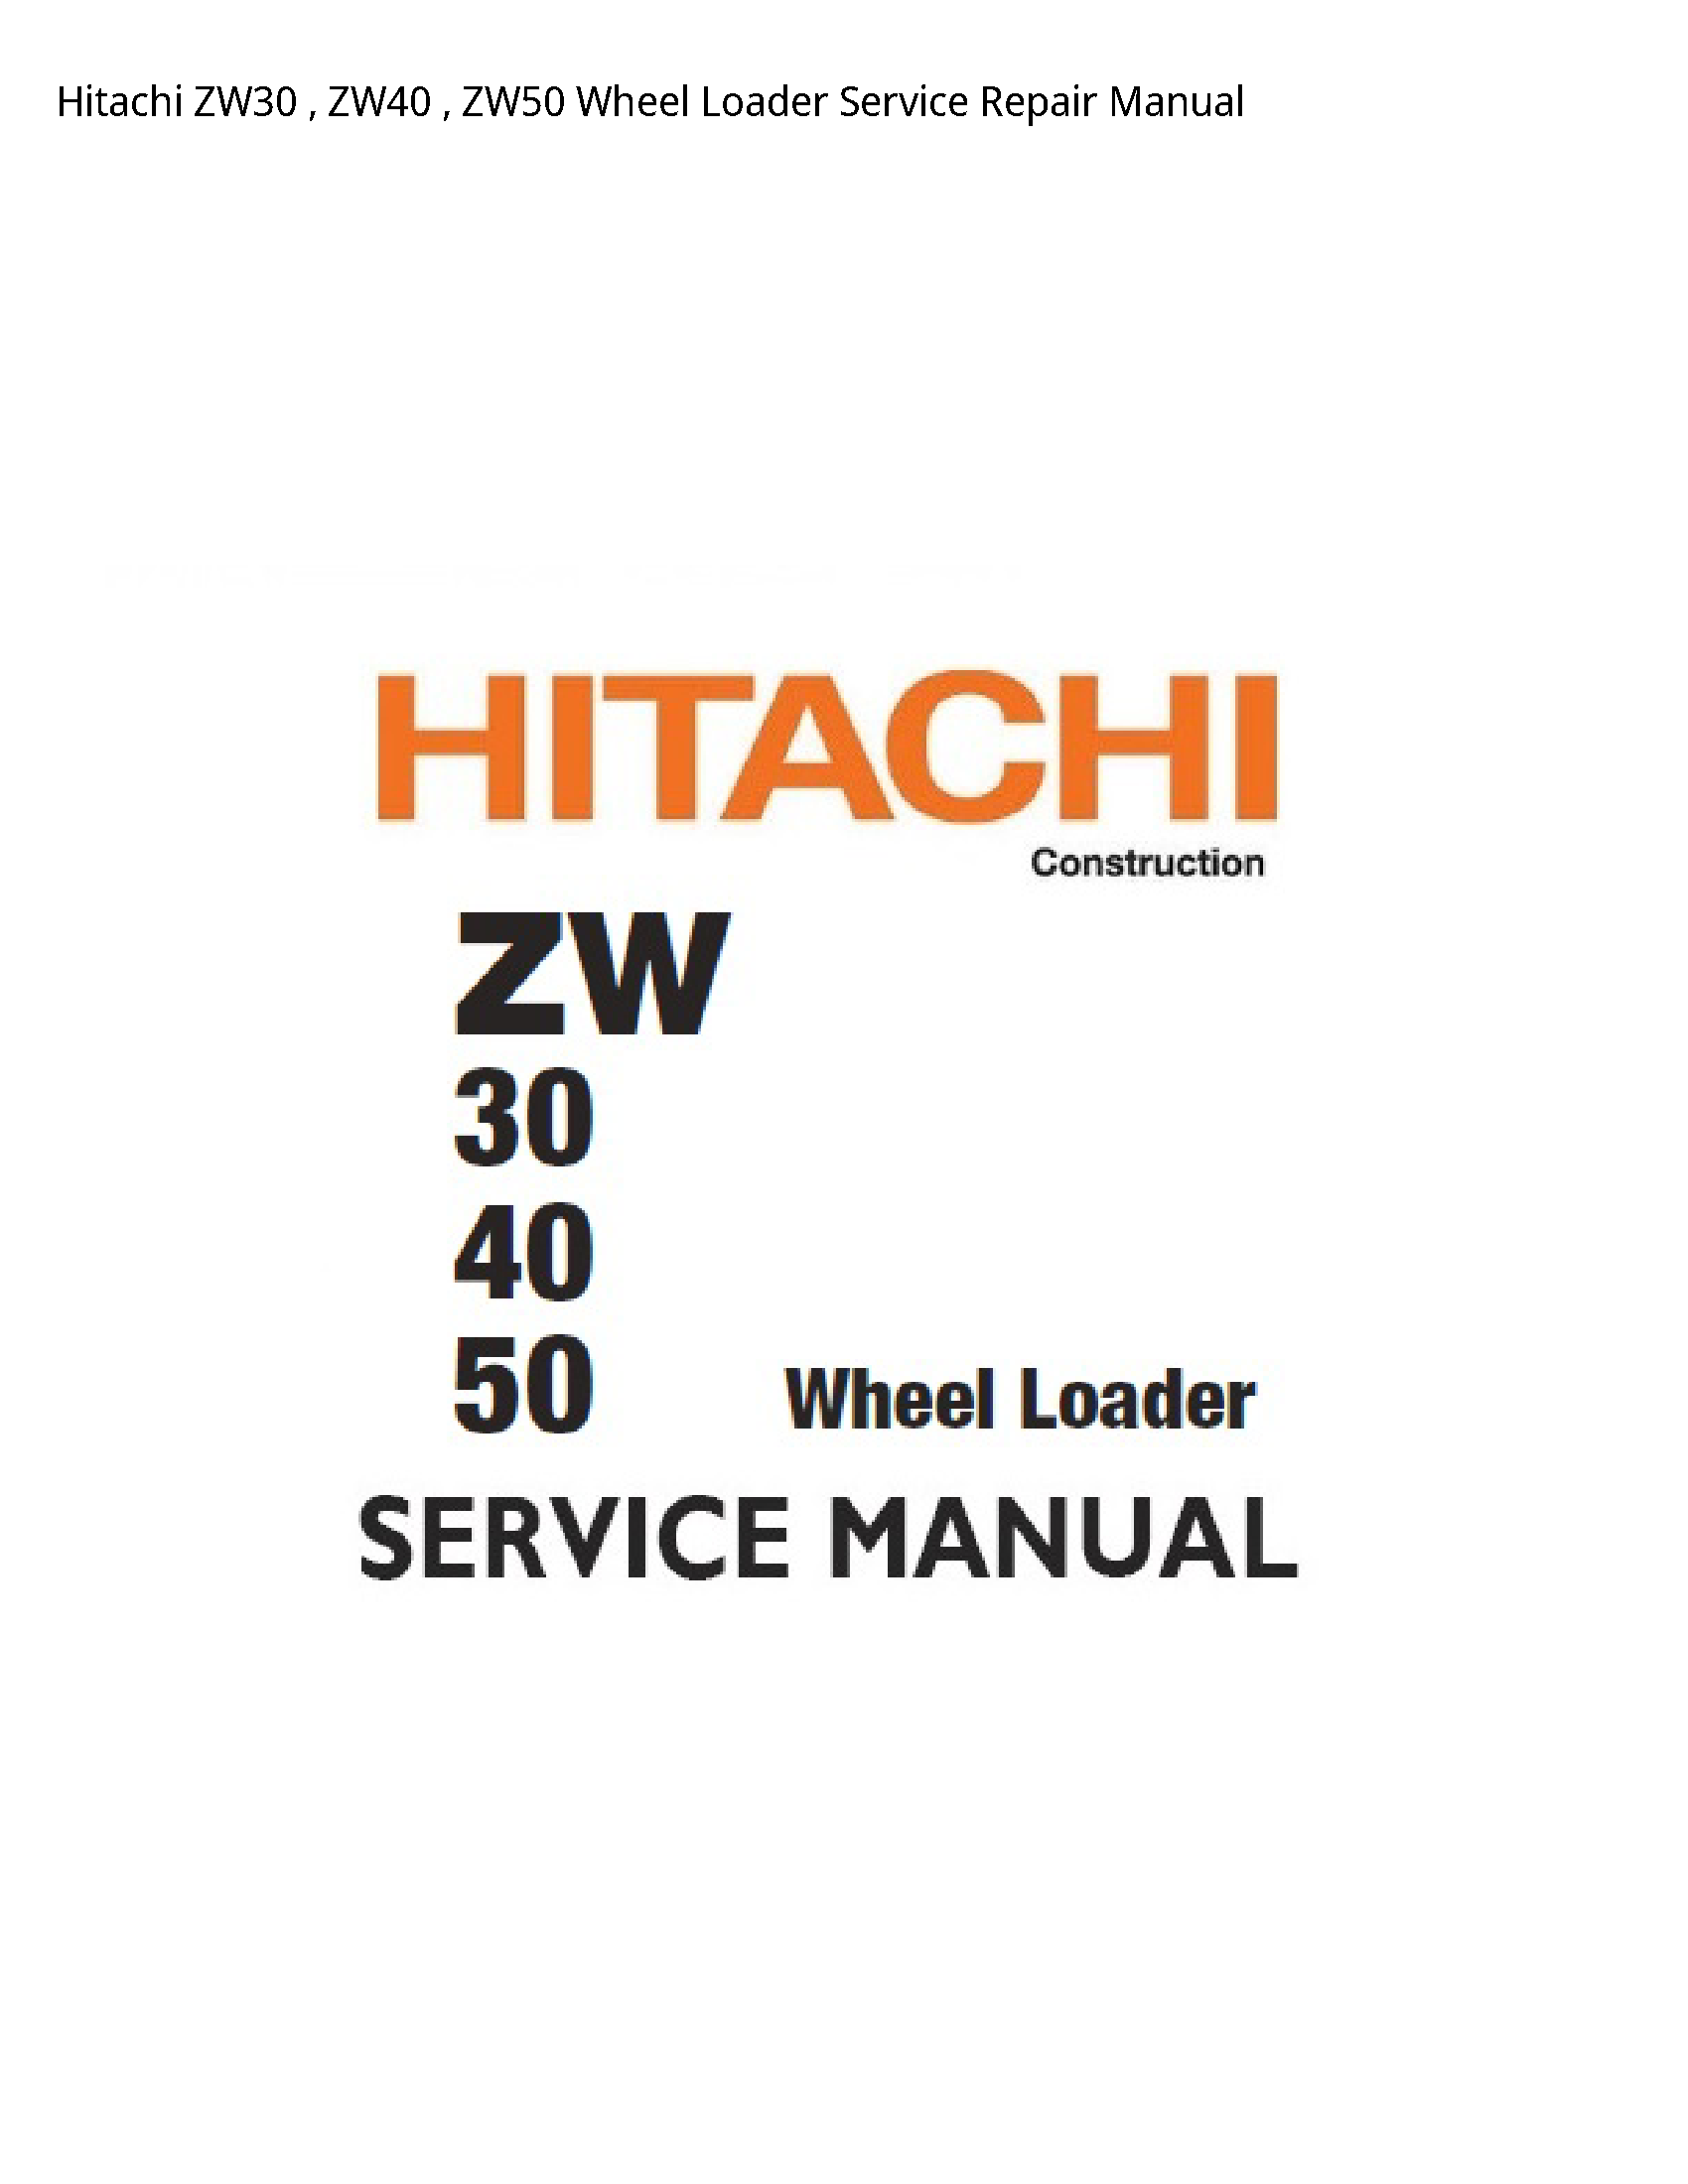 Hitachi ZW30 Wheel Loader manual